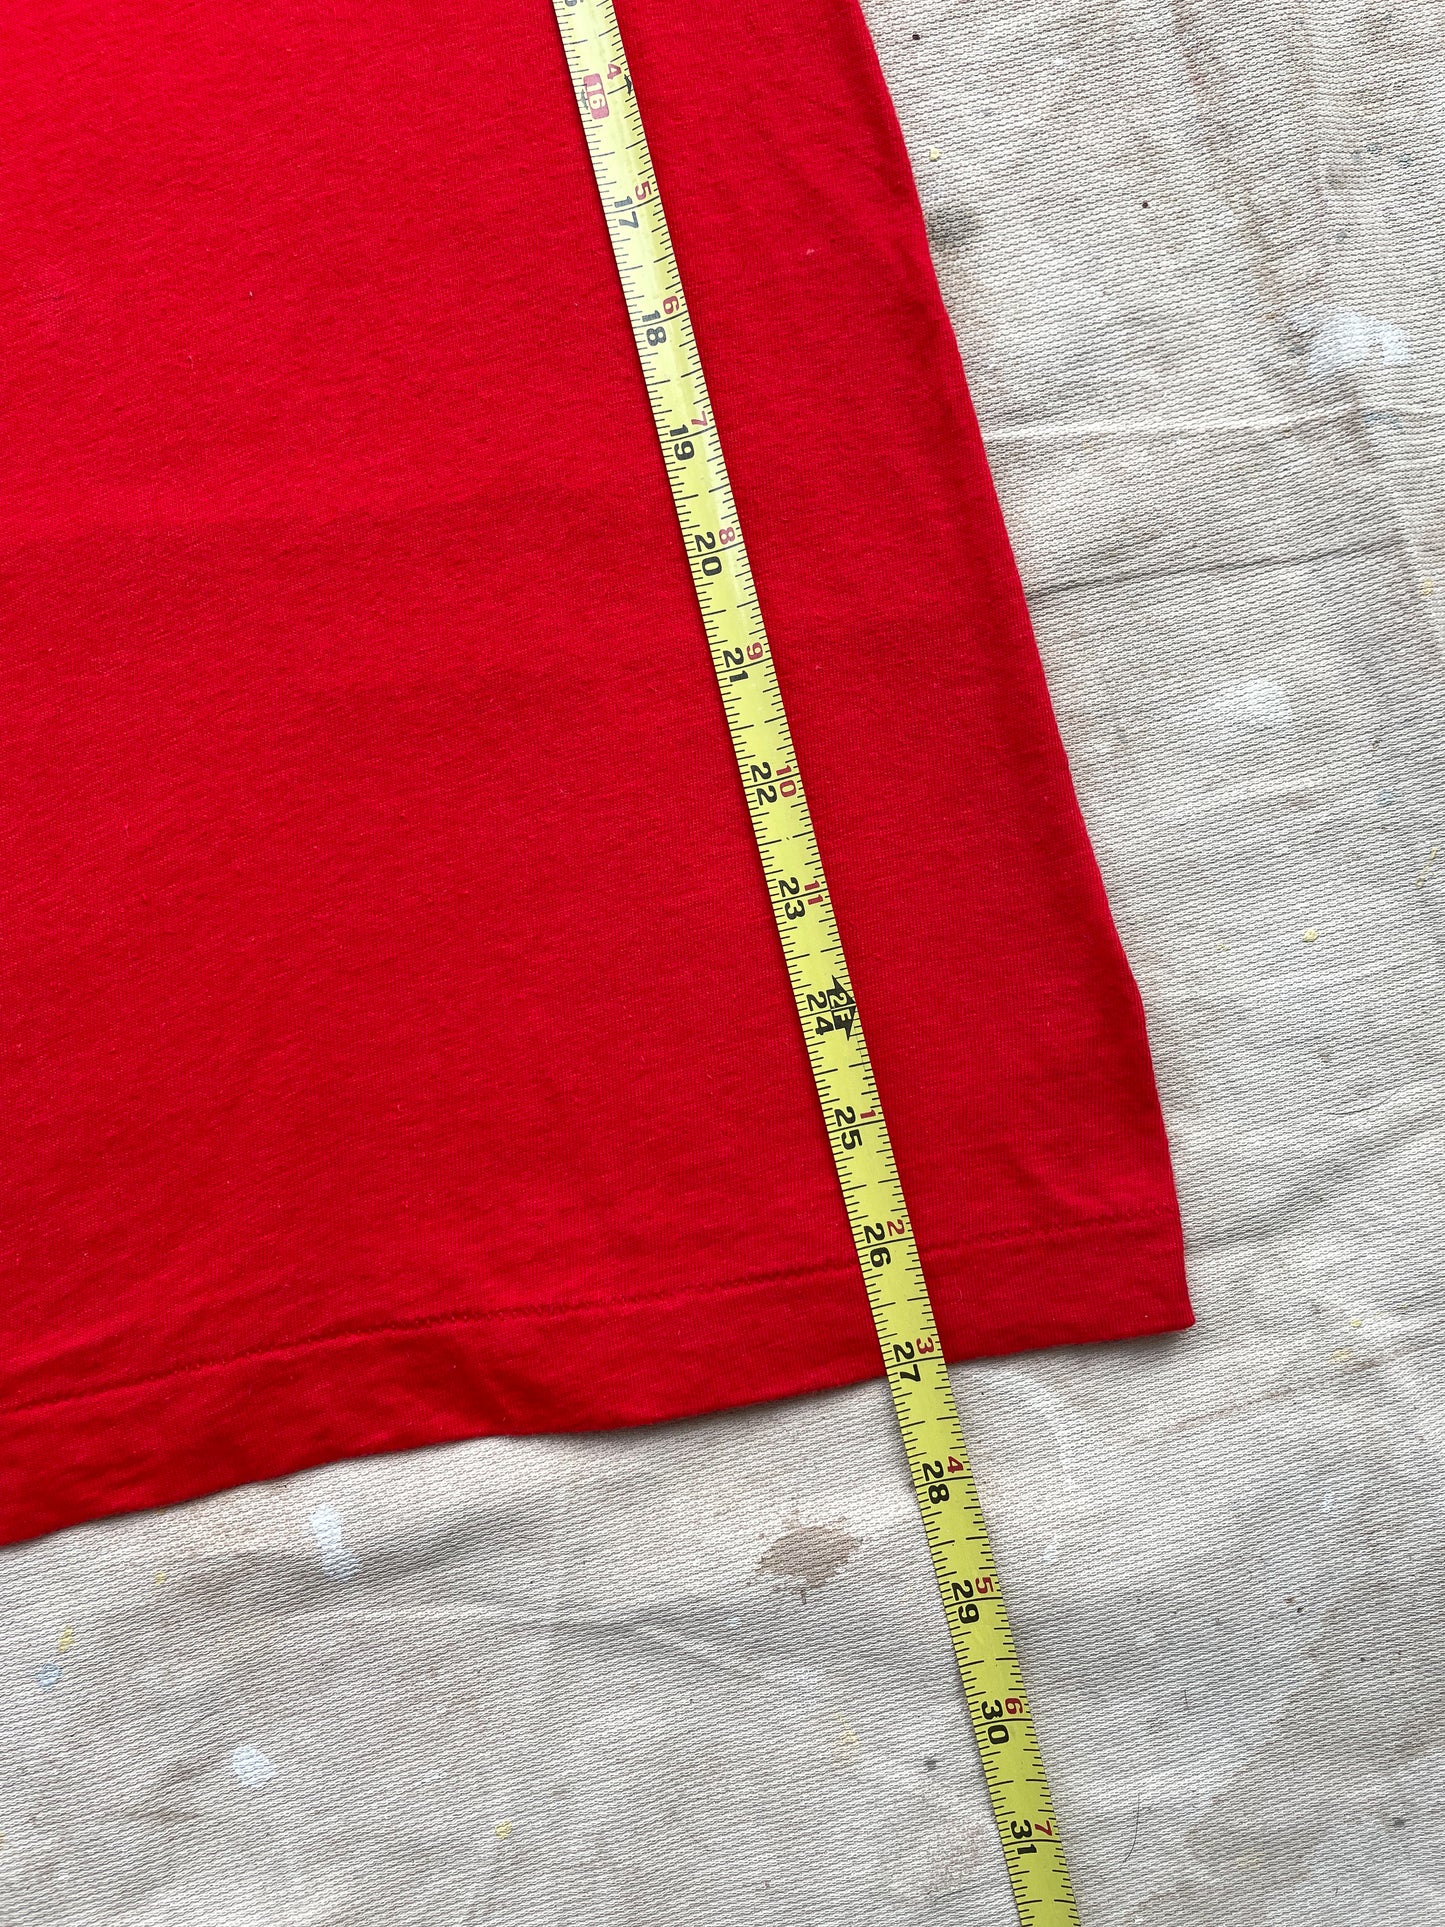 Blank Red Pocket T-Shirt—[M]